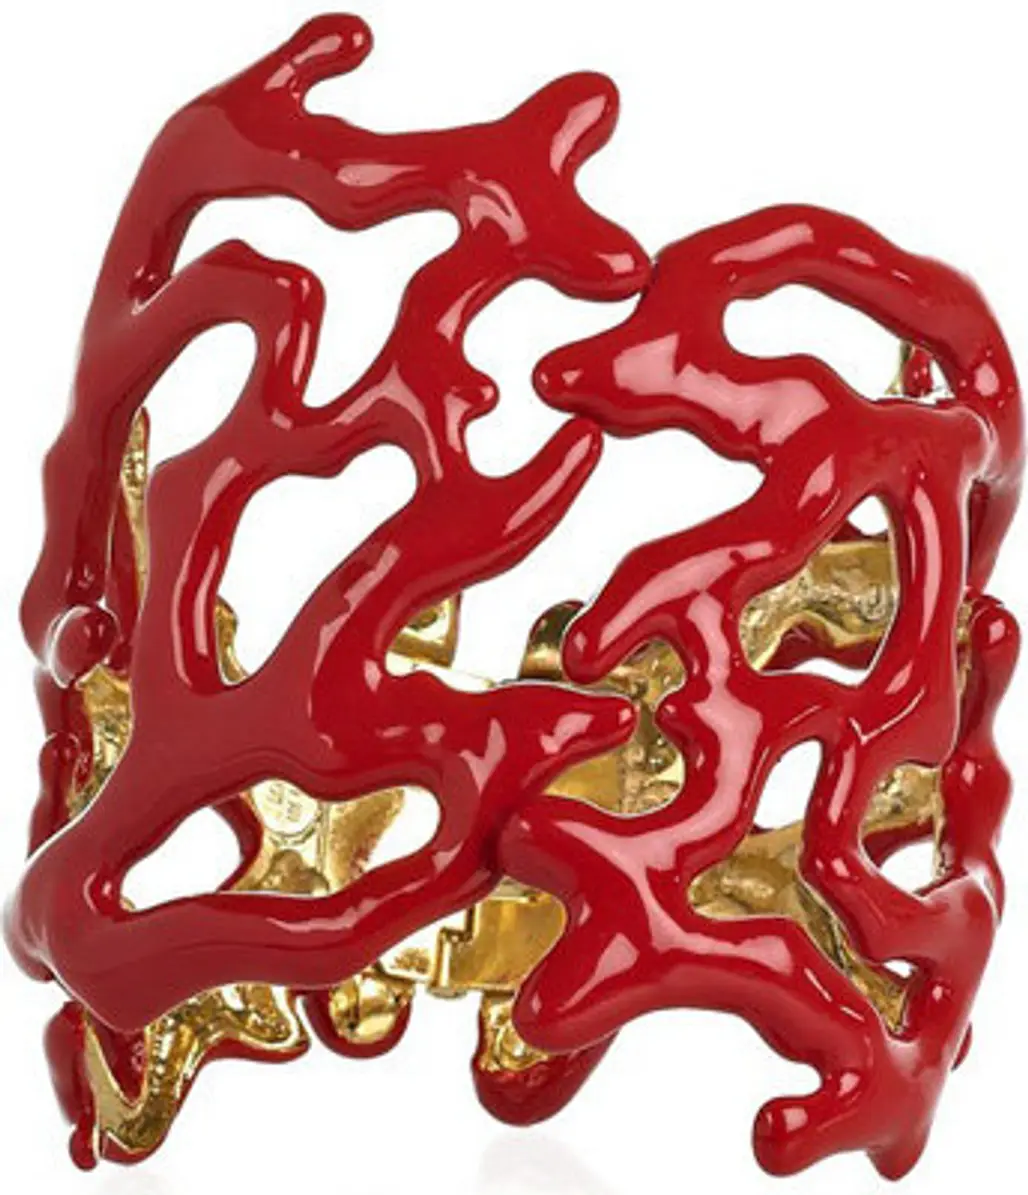 Kenneth Jay Lane Coral-inspired Bracelet